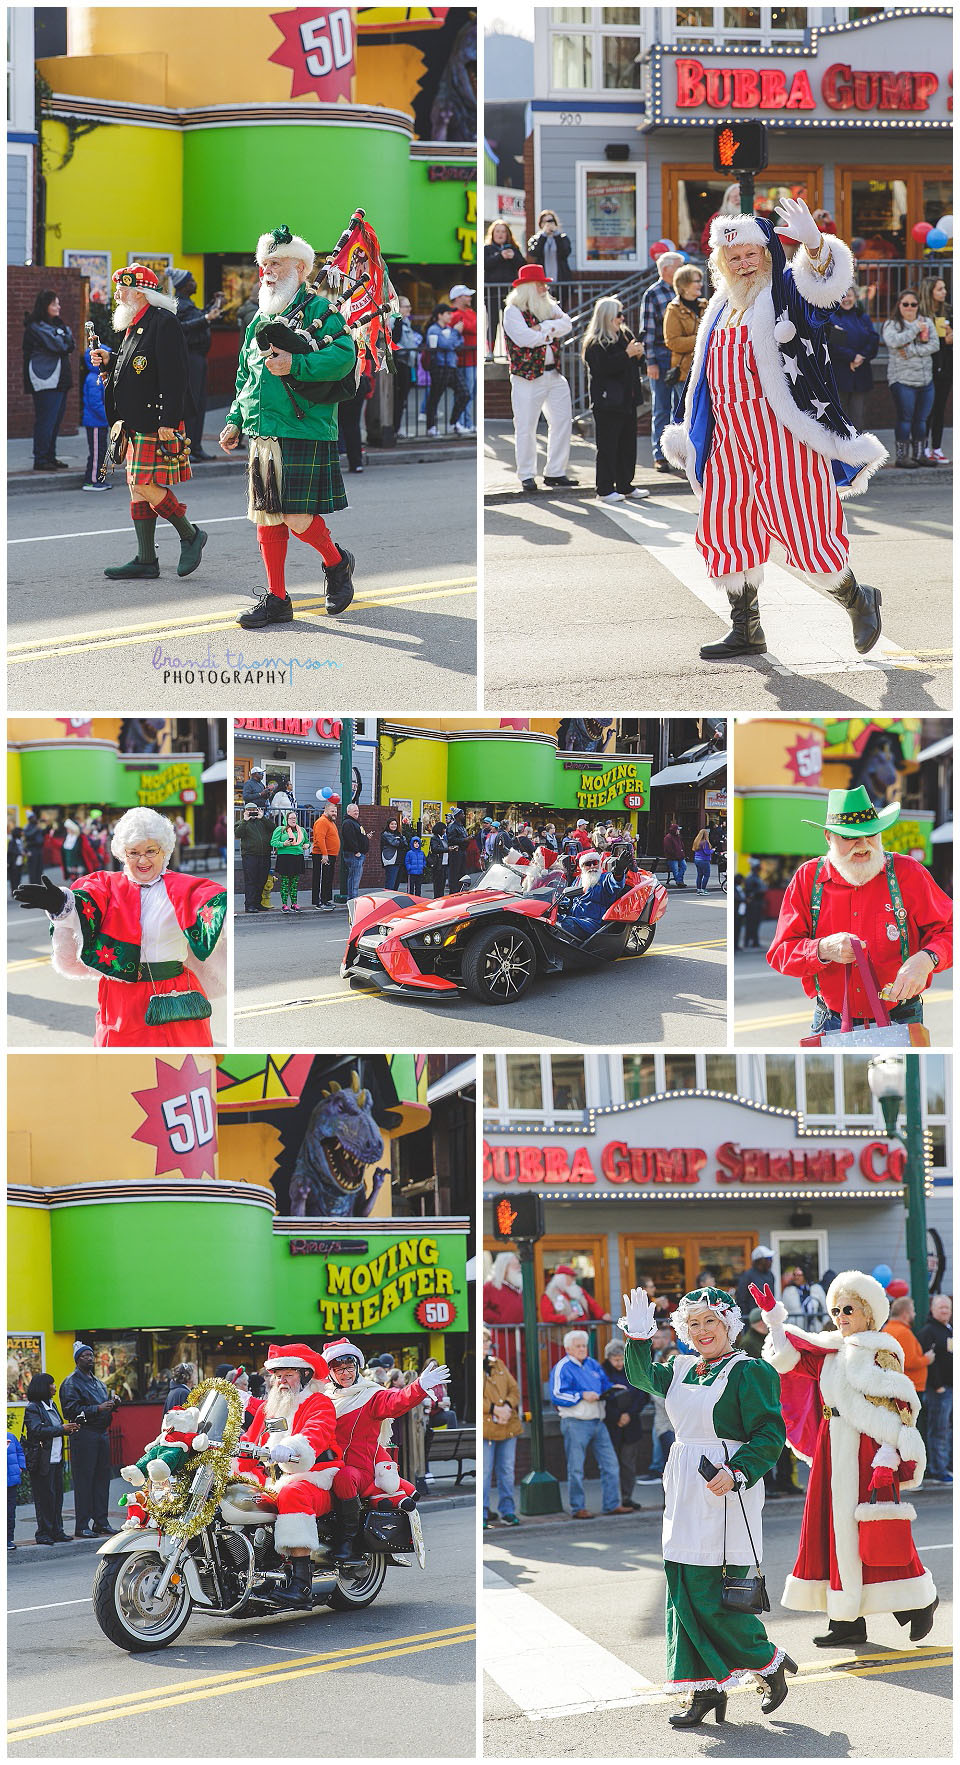 gatlinburg, tn travel photos, parade of santas